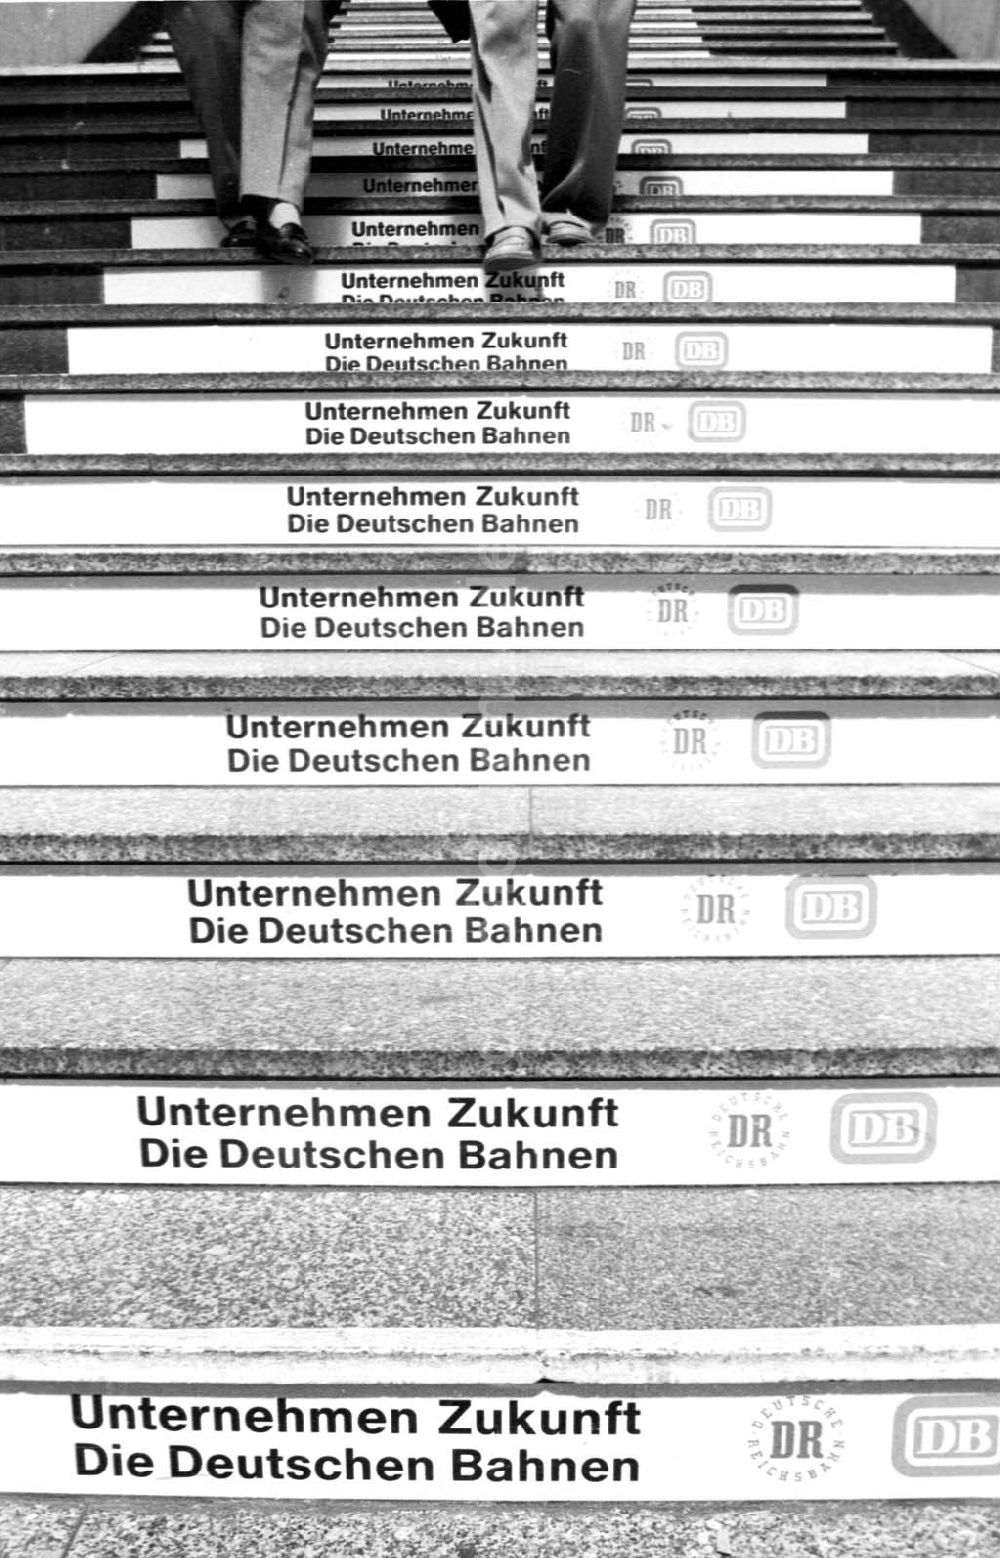 DDR-Bildarchiv: Berlin - Umschlagsnr.: 1993-176